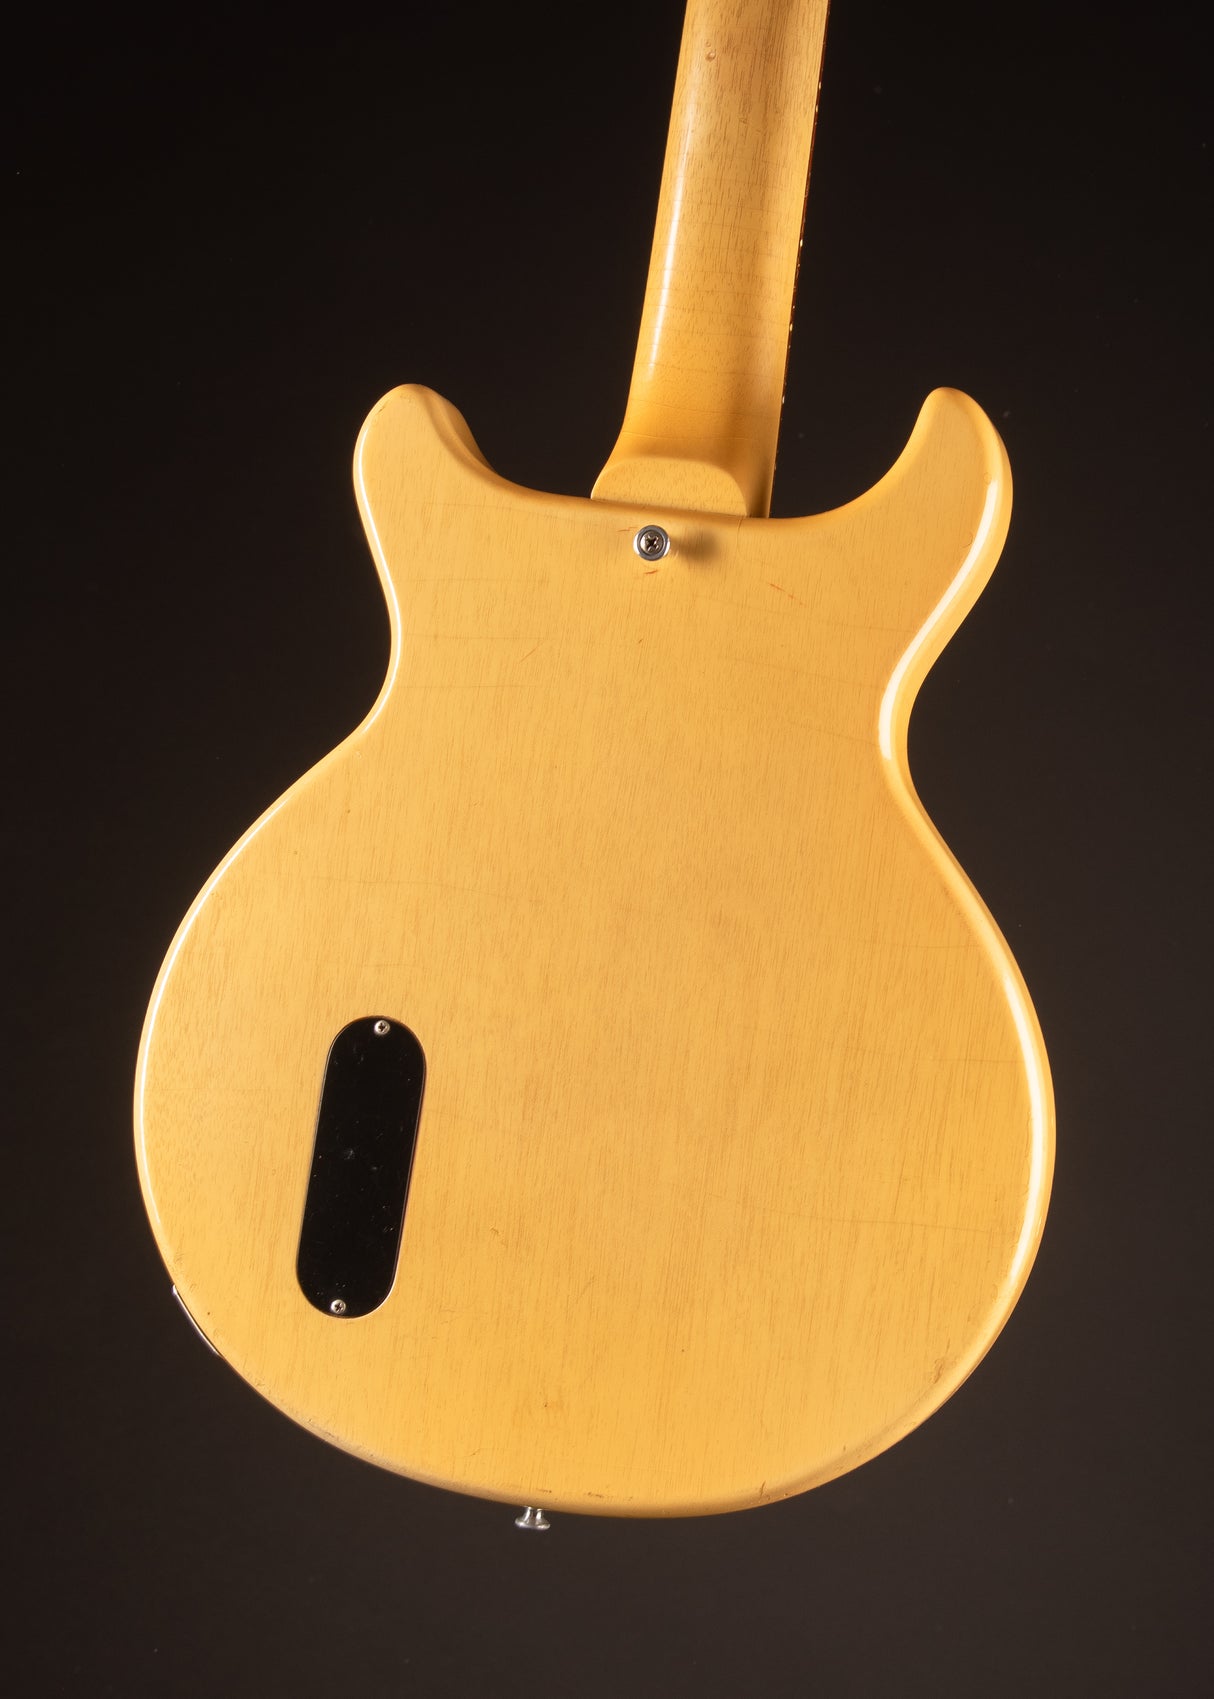 1960 Gibson Les Paul Jr. TV Yellow